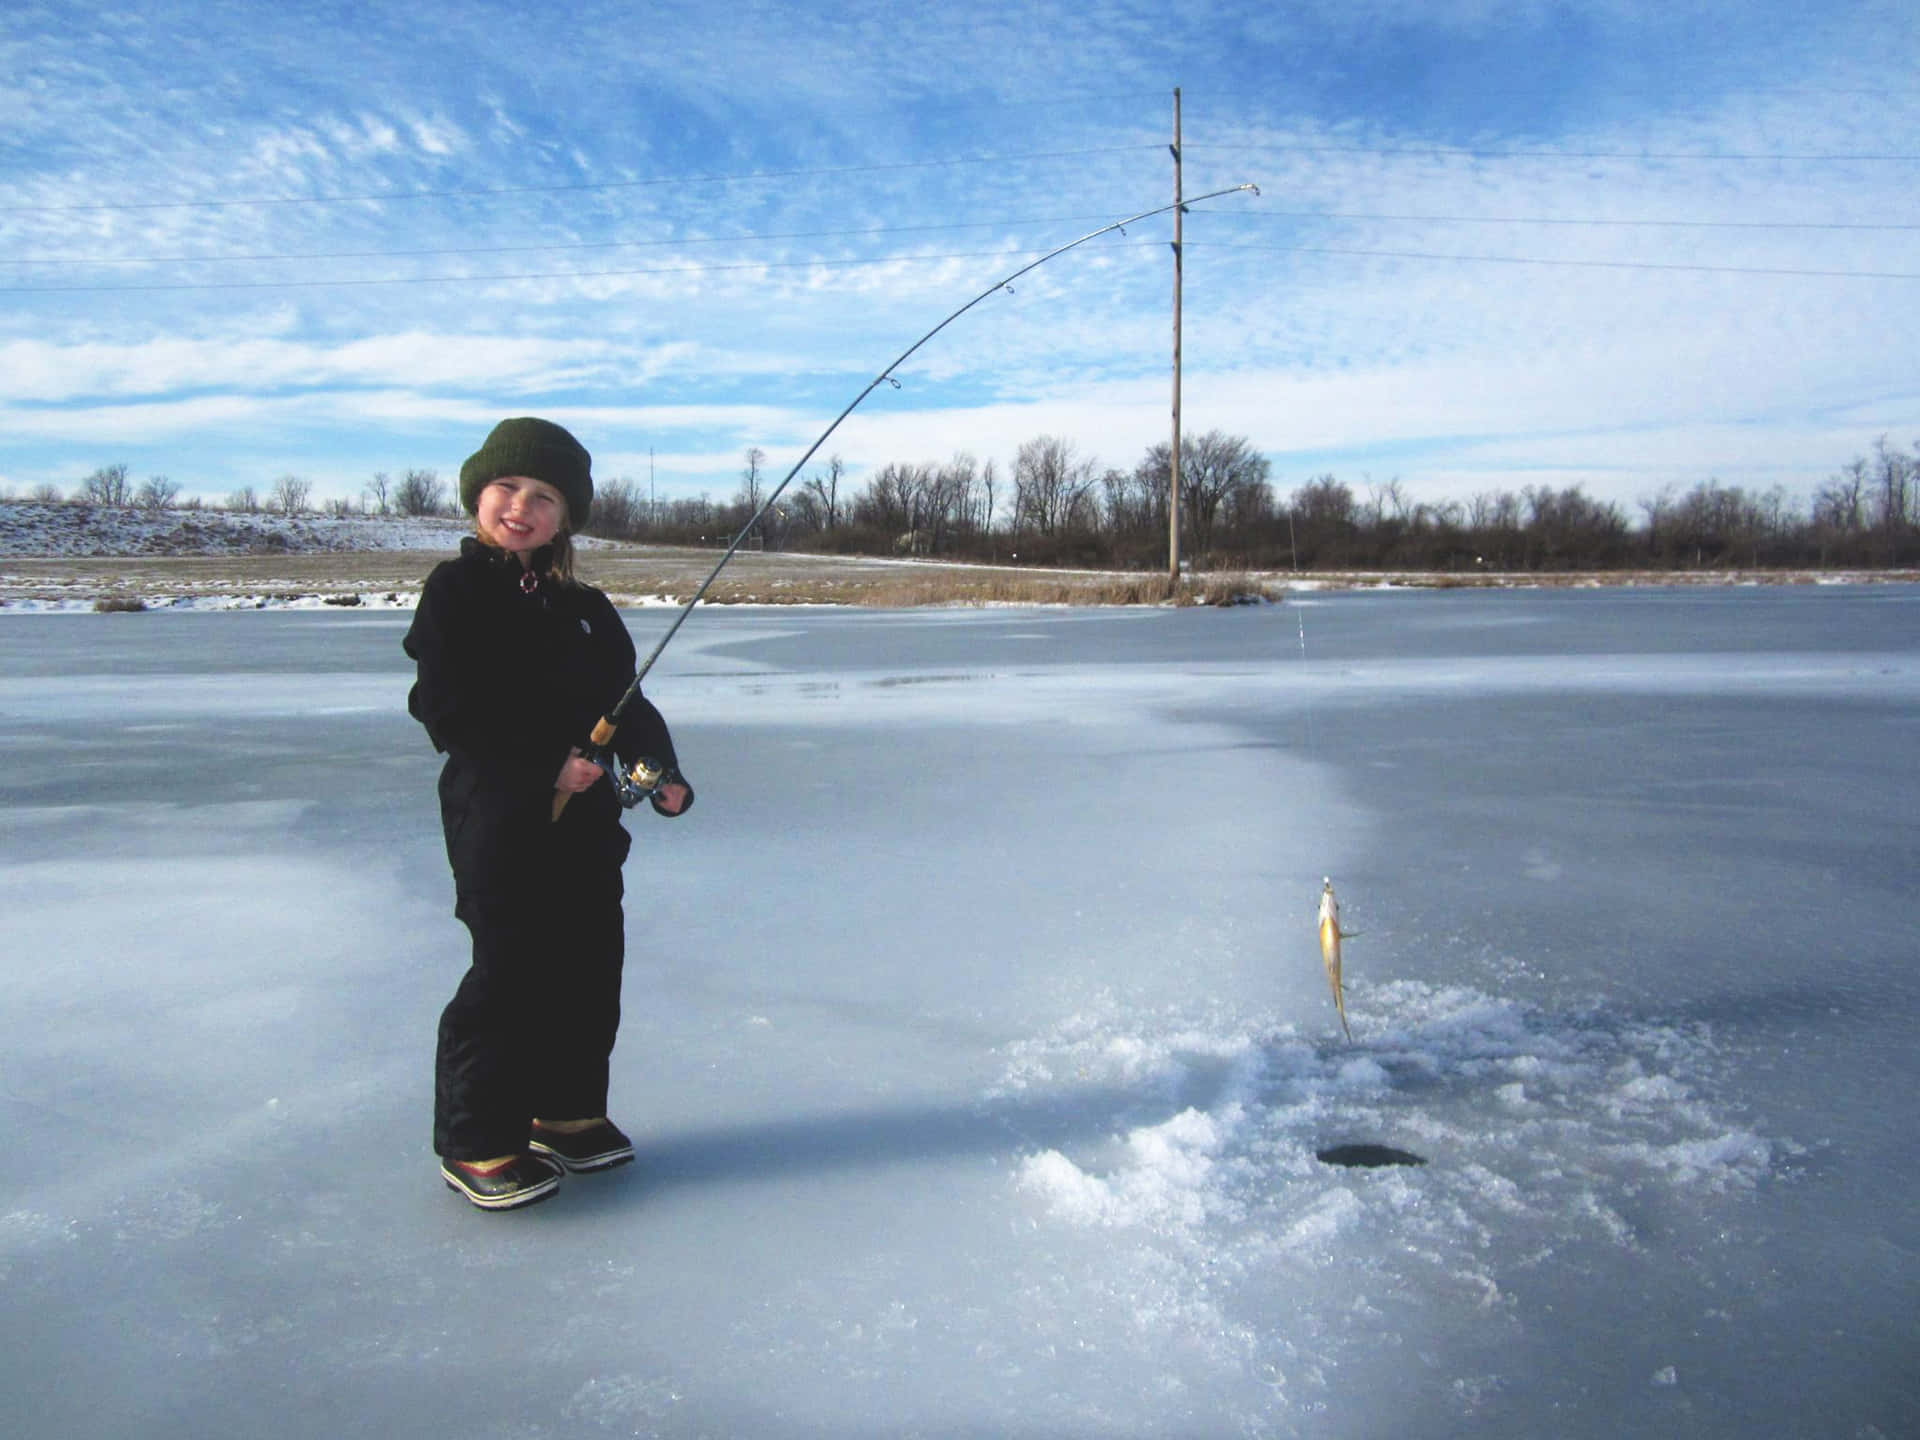 Caption: Ice fishing adventures in snowy winter landscape Wallpaper